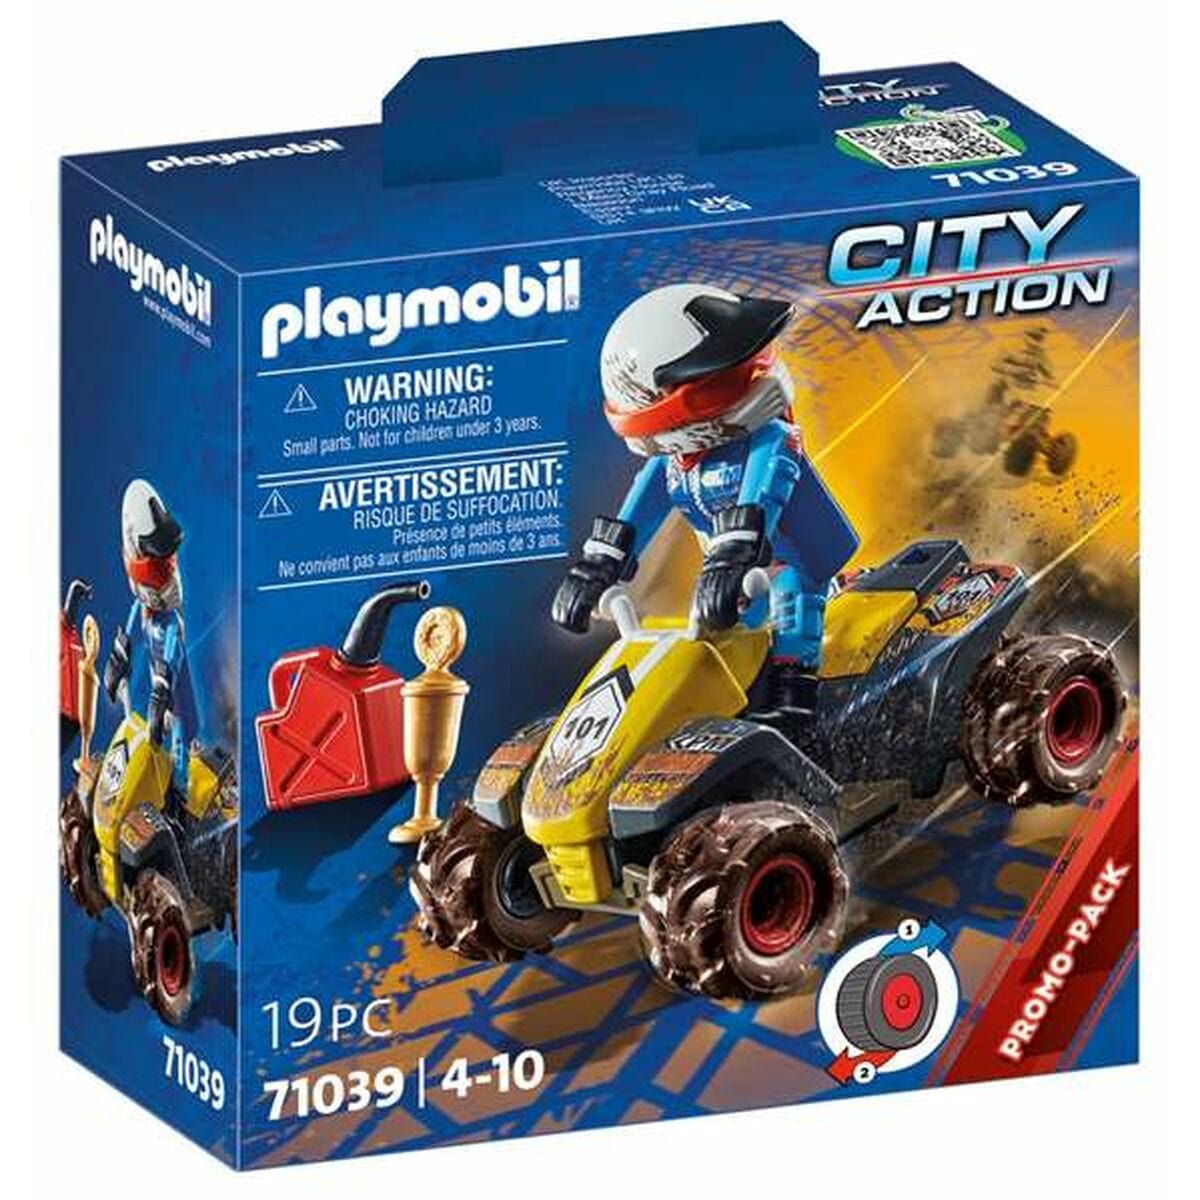 Playmobil Spielzeug | Kostüme > Spielzeug und Spiele > Weiteres spielzeug Playset Playmobil City Action Offroad Quad 19 Stücke 71039